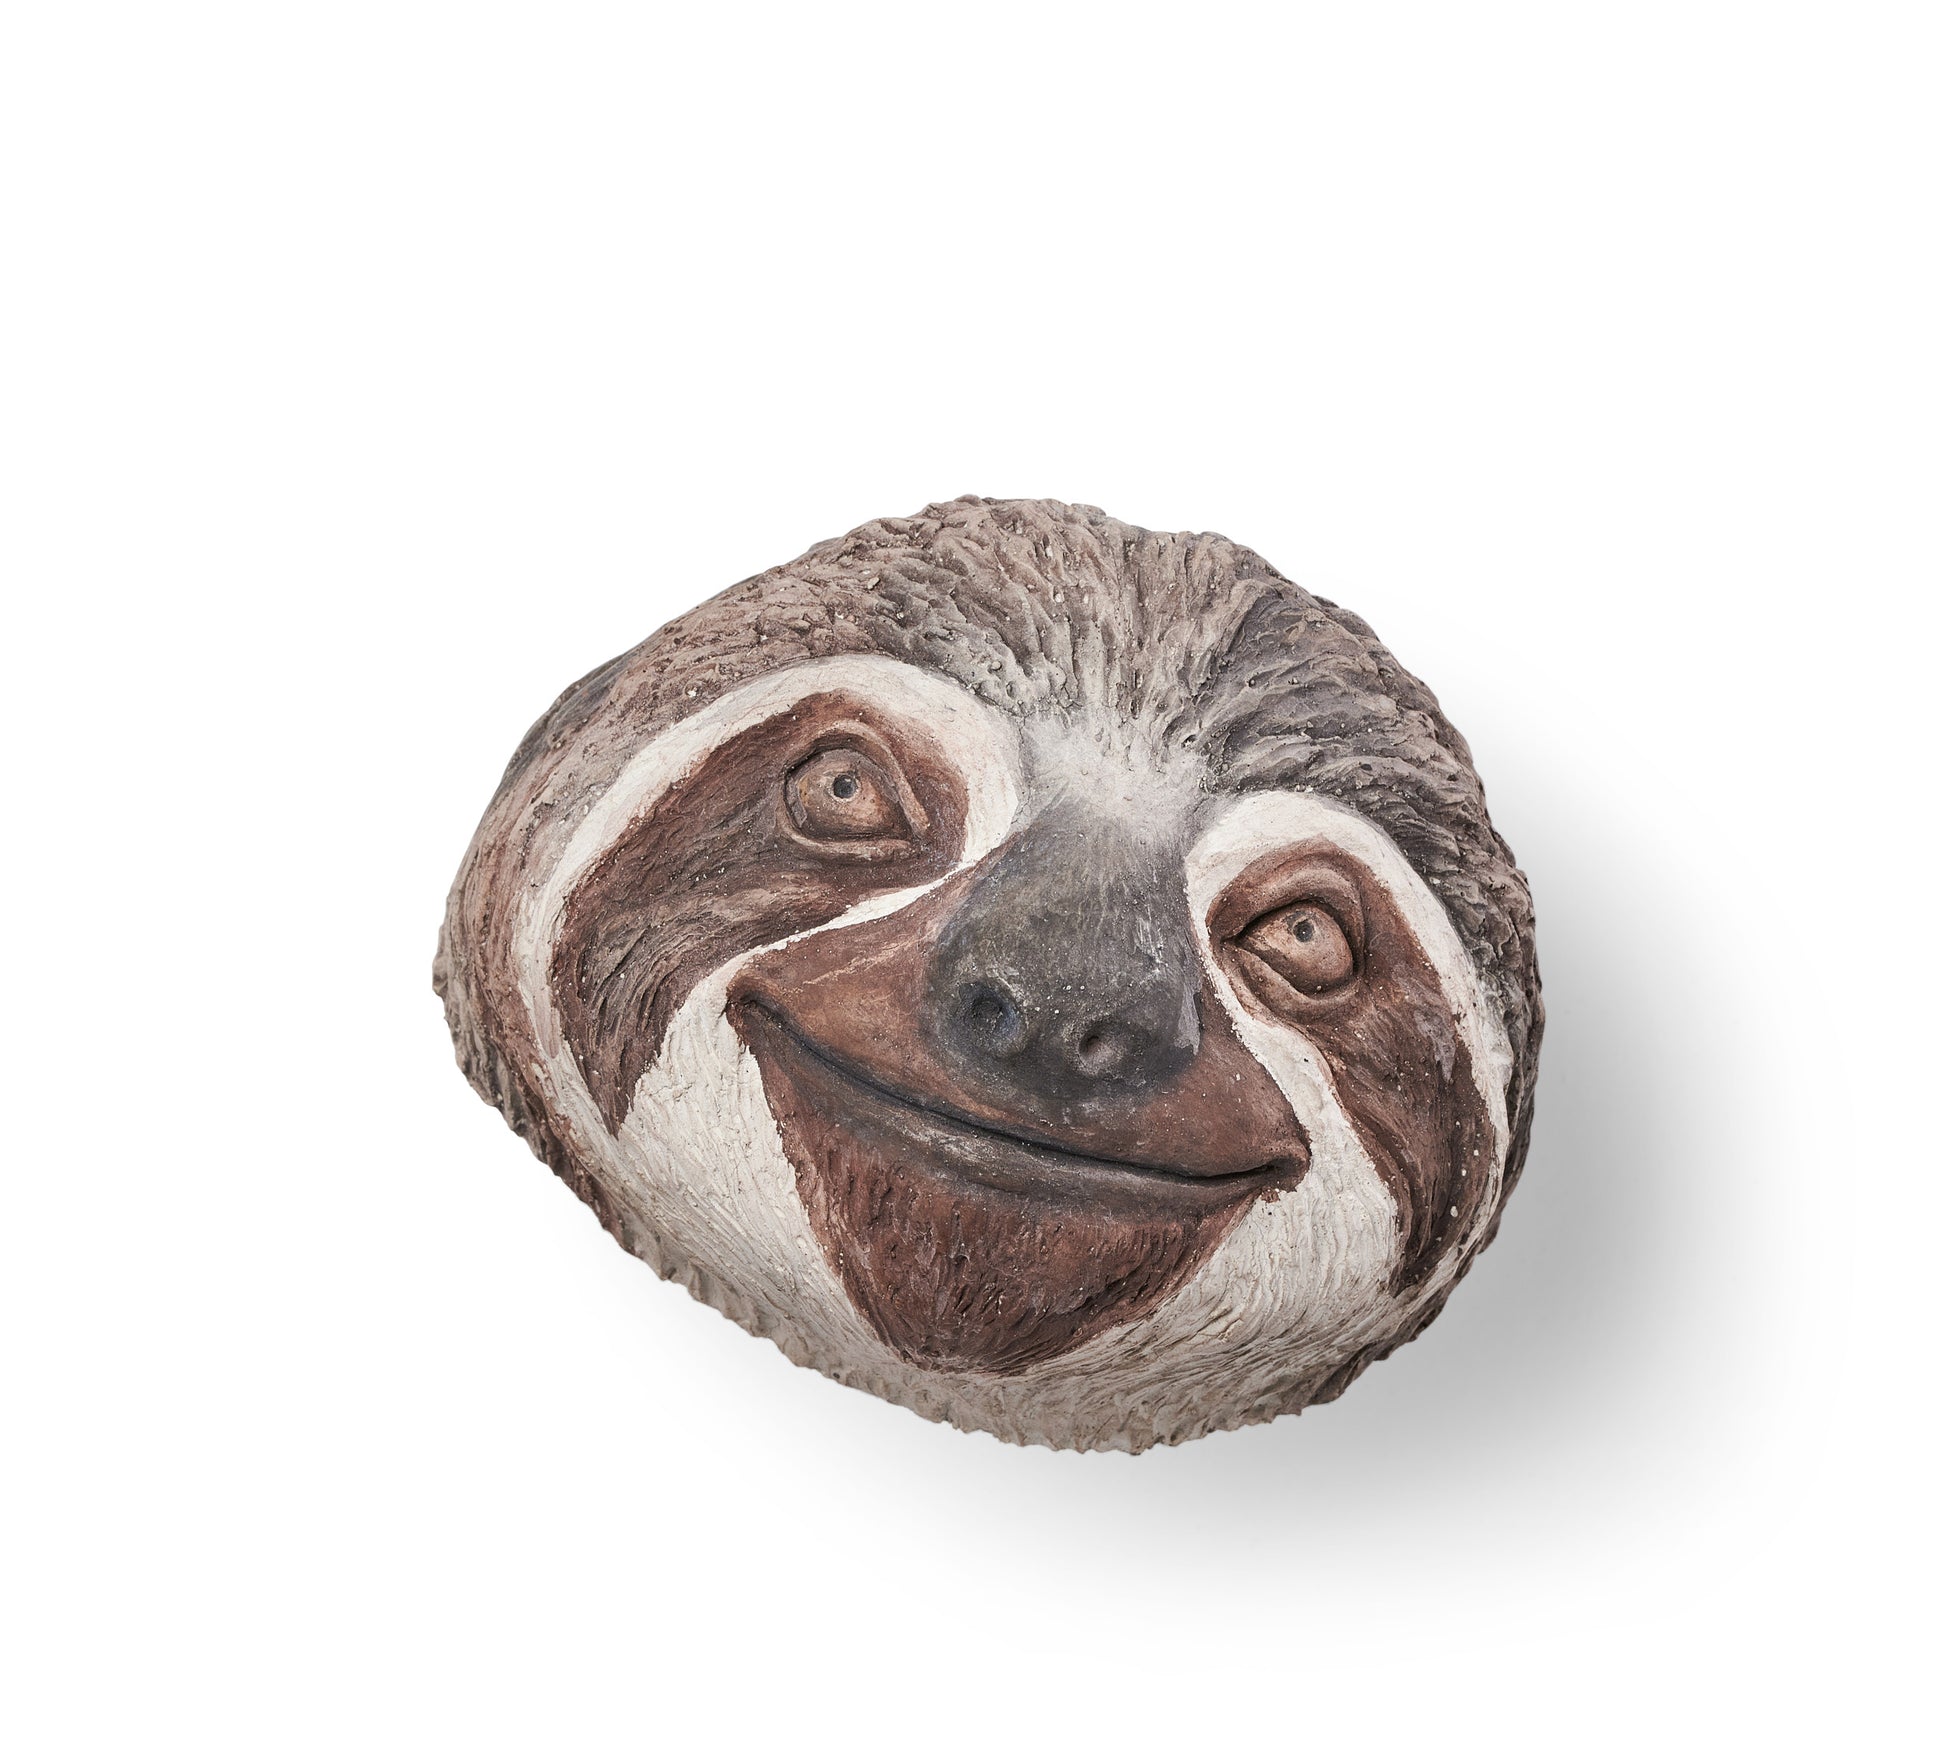 sloth face drawing